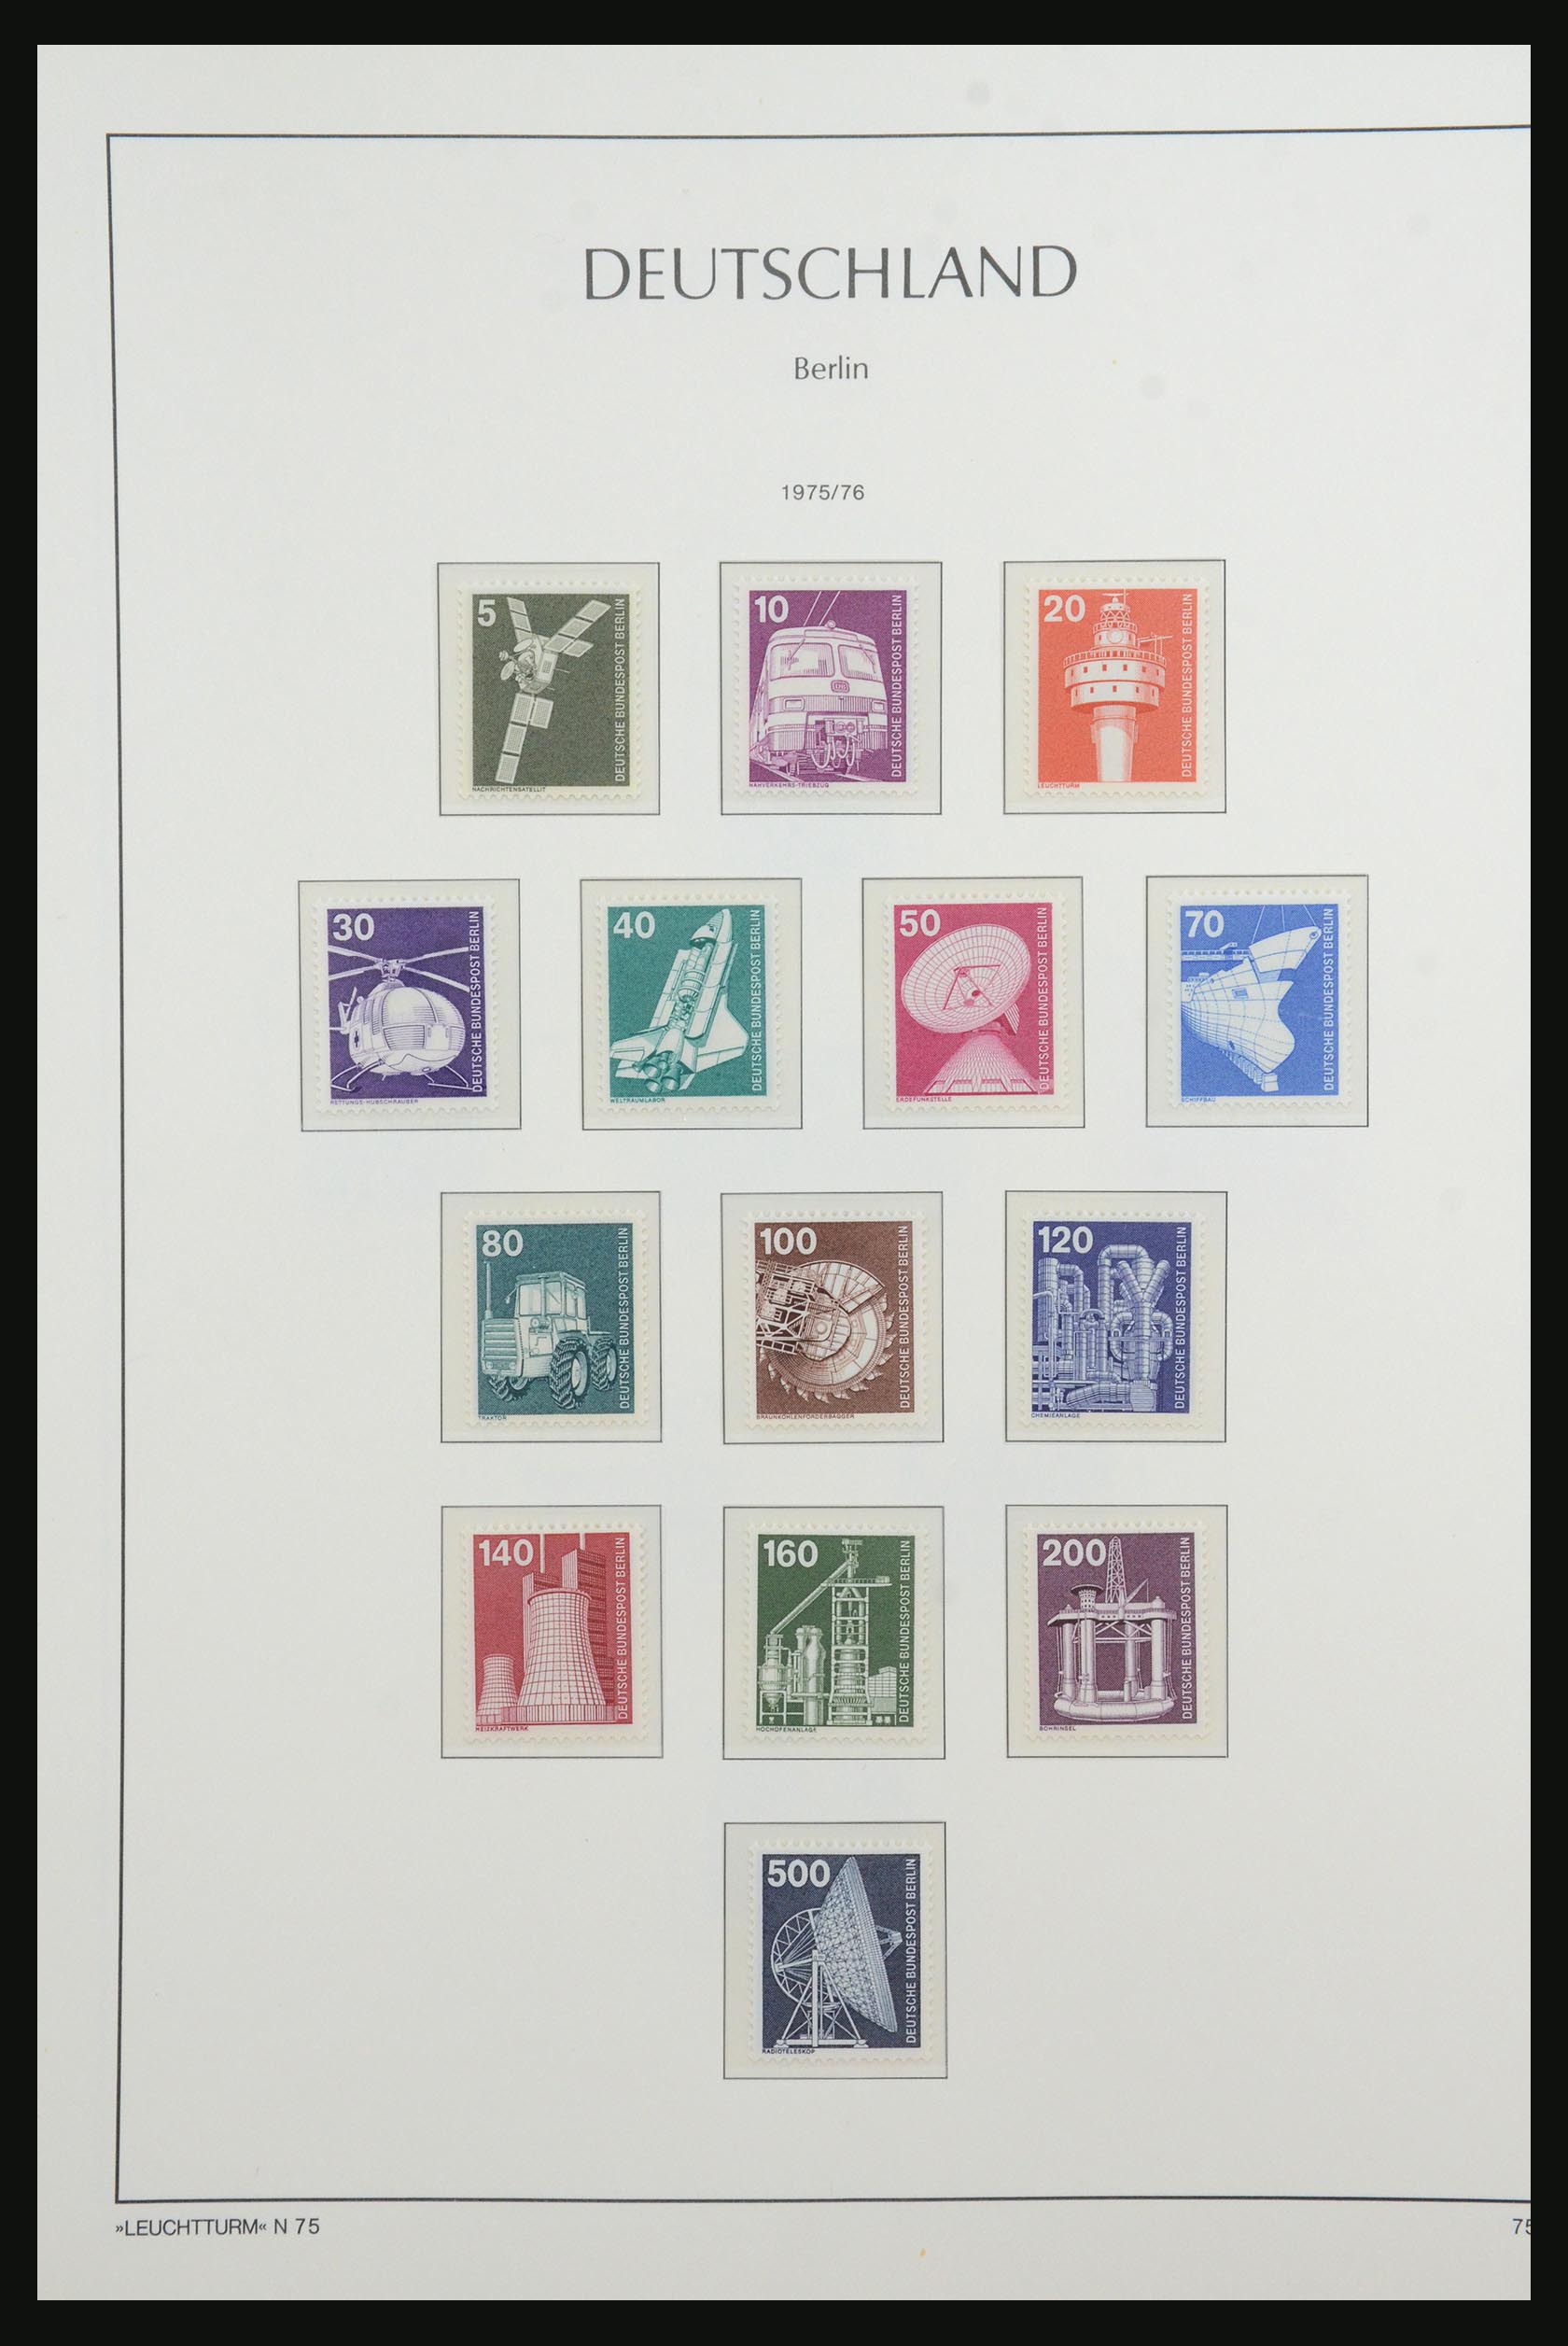 31601 046 - 31601 Bundespost, Berlin and Saar 1948-2008.